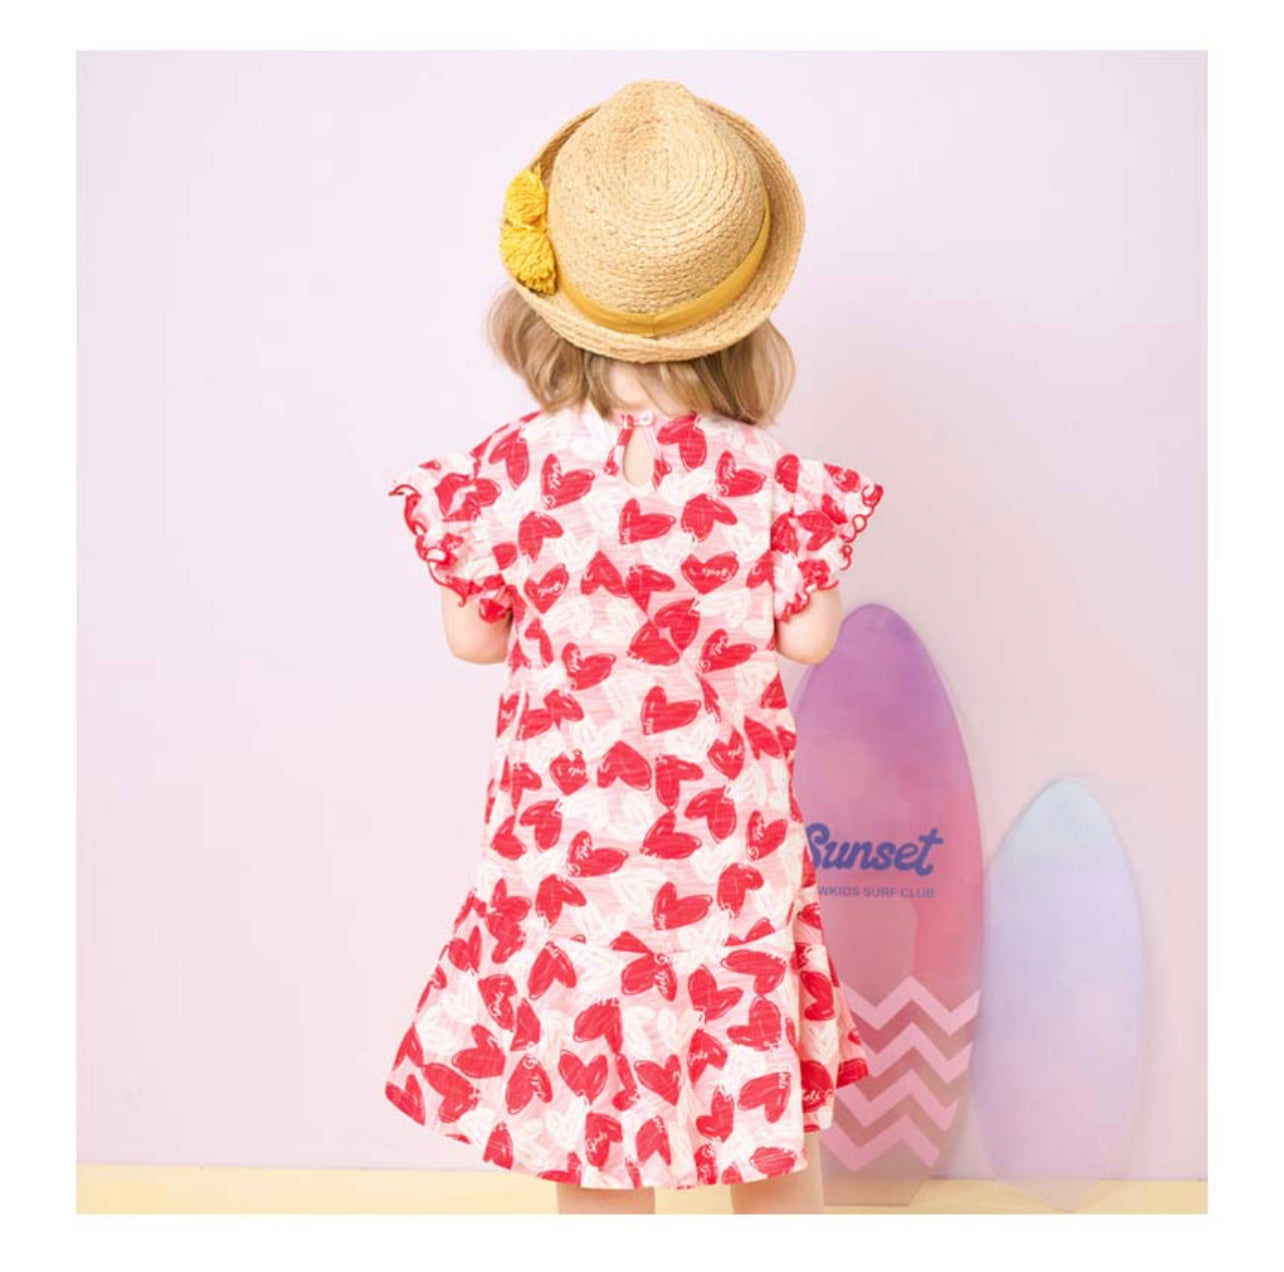 Lovey-Dovey Heart Dress - Pink / Yellow